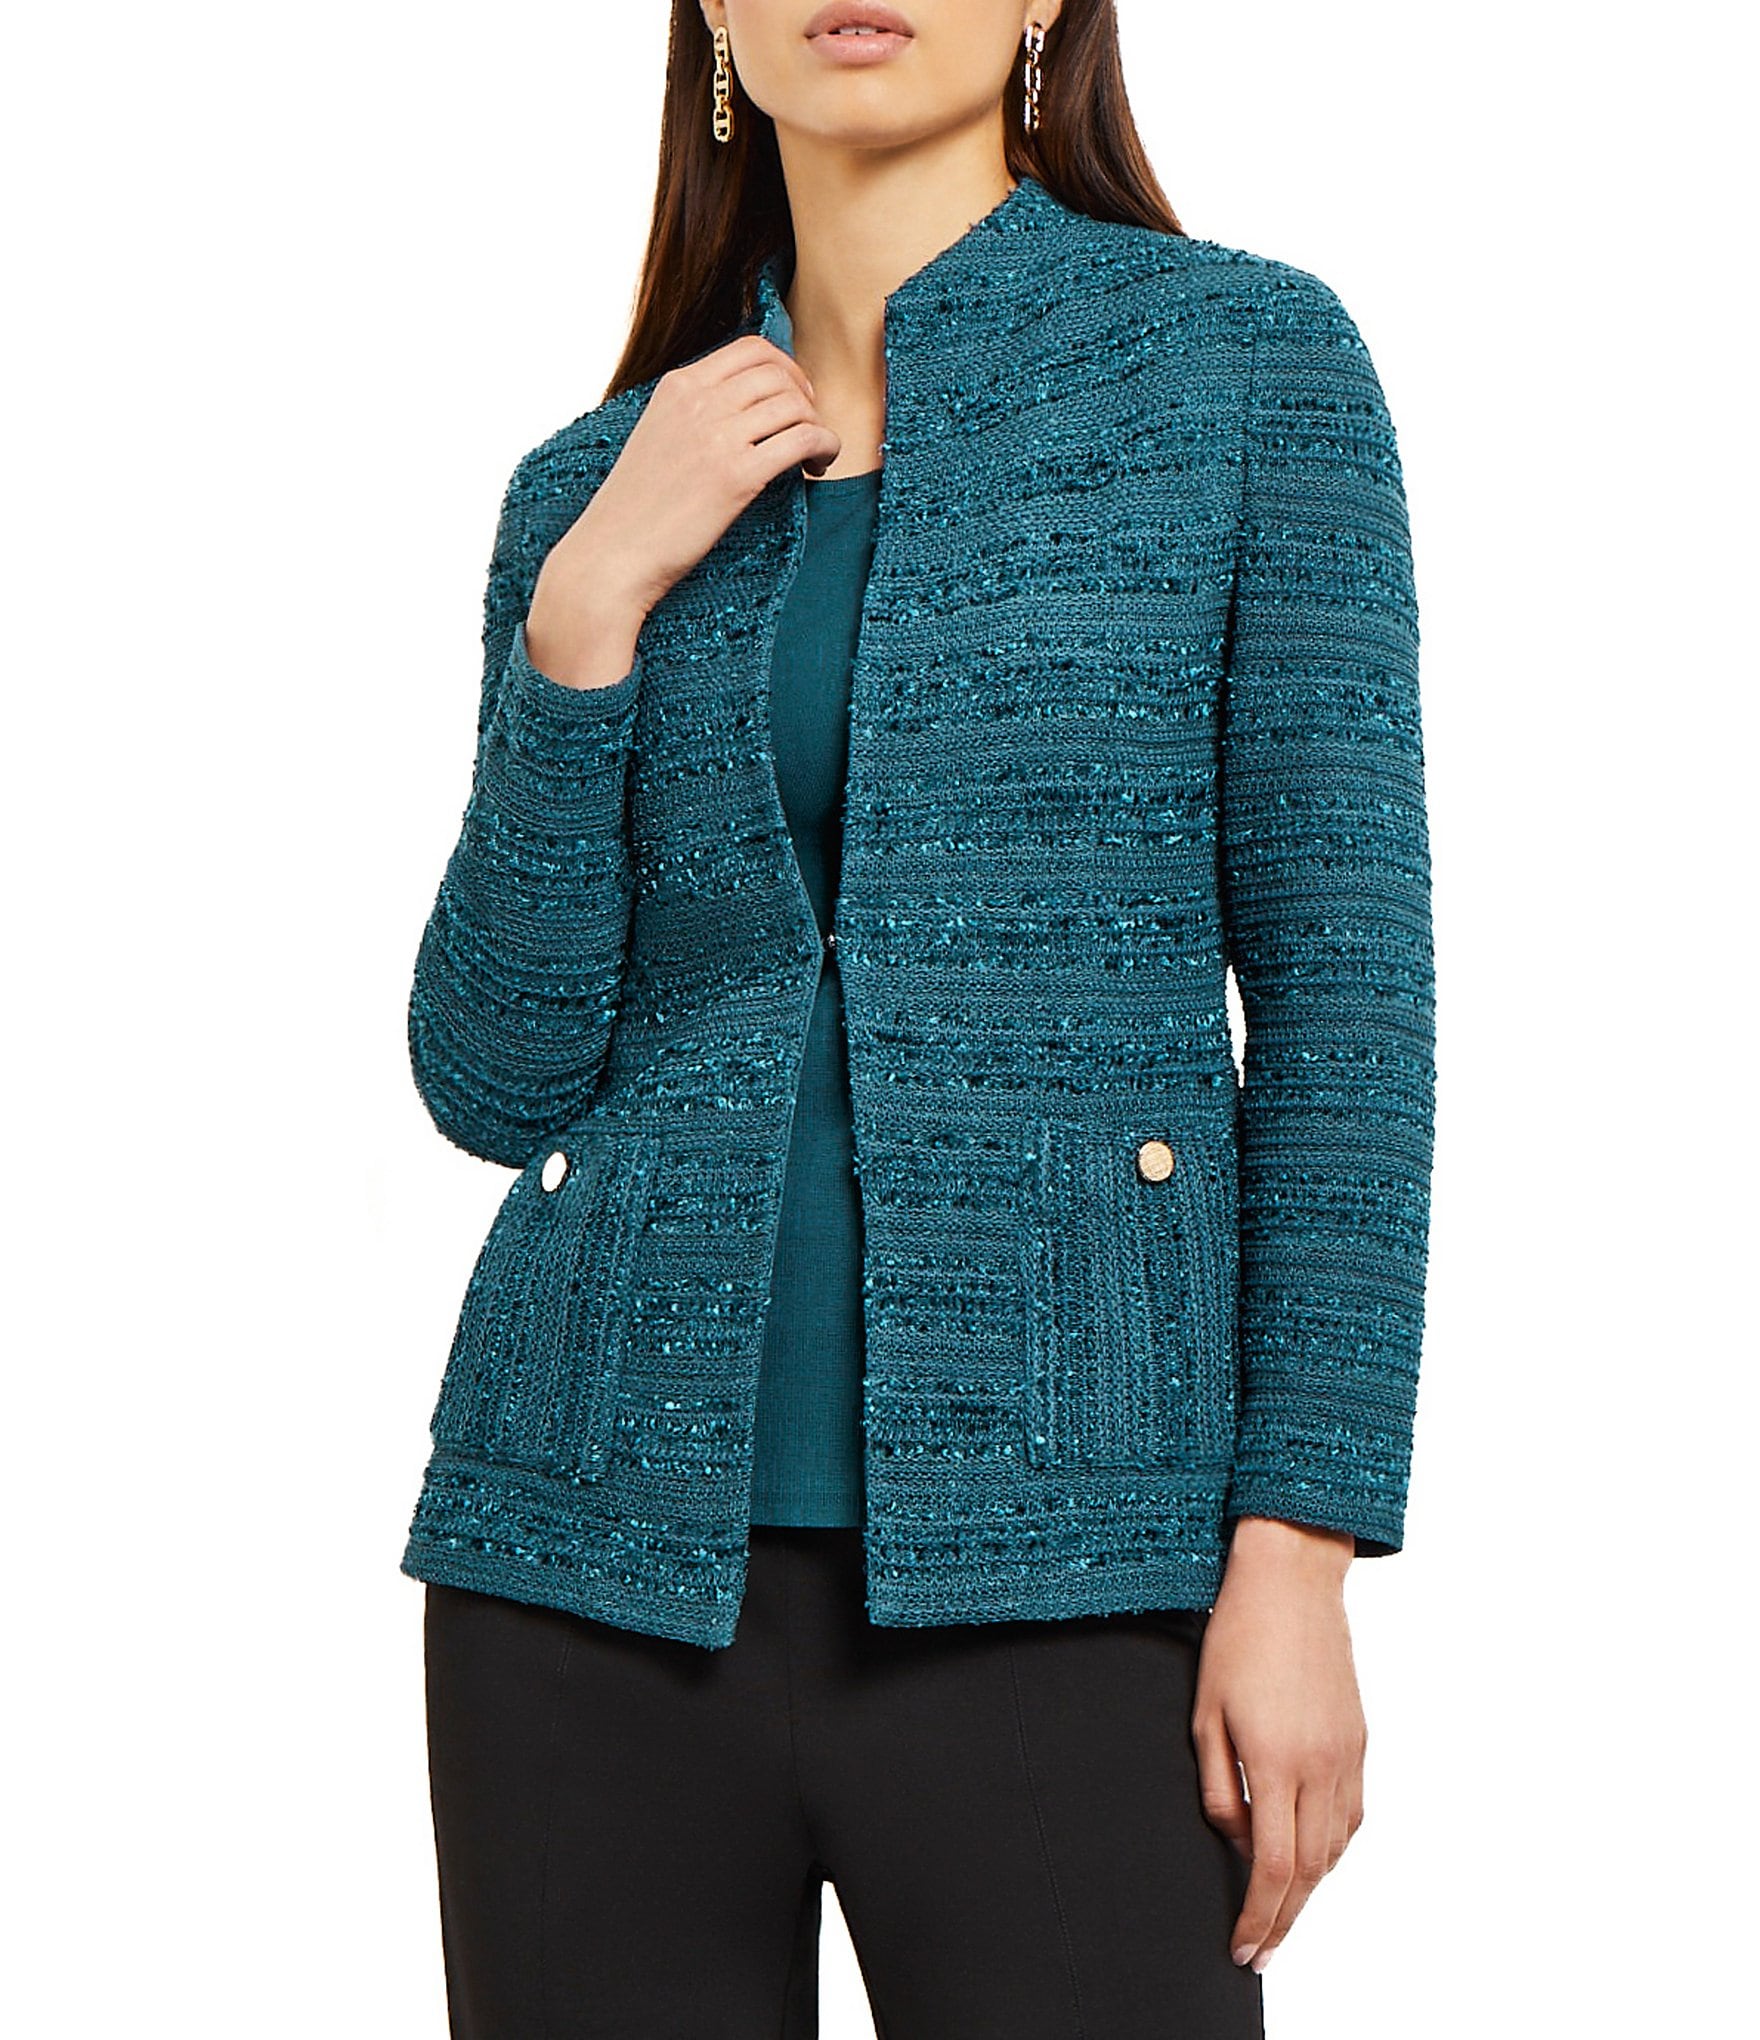 MISOOK Textured Tweed Knit Stand Collar Long Sleeve Pocketed Jacket ...